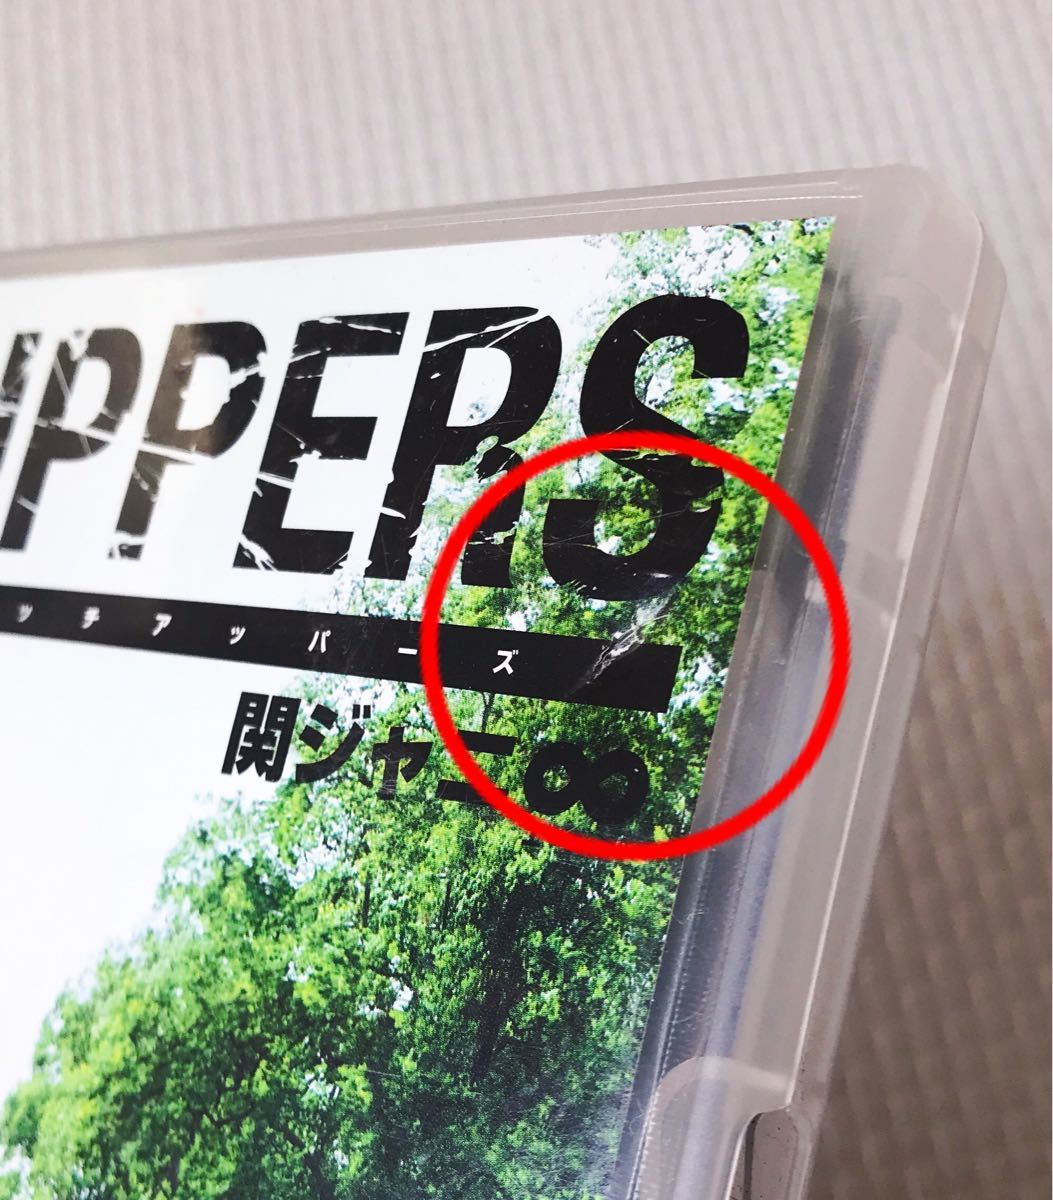 Paypayフリマ 初回限定盤アルバム 関ジャニ 8uppers Cd Dvd D1111